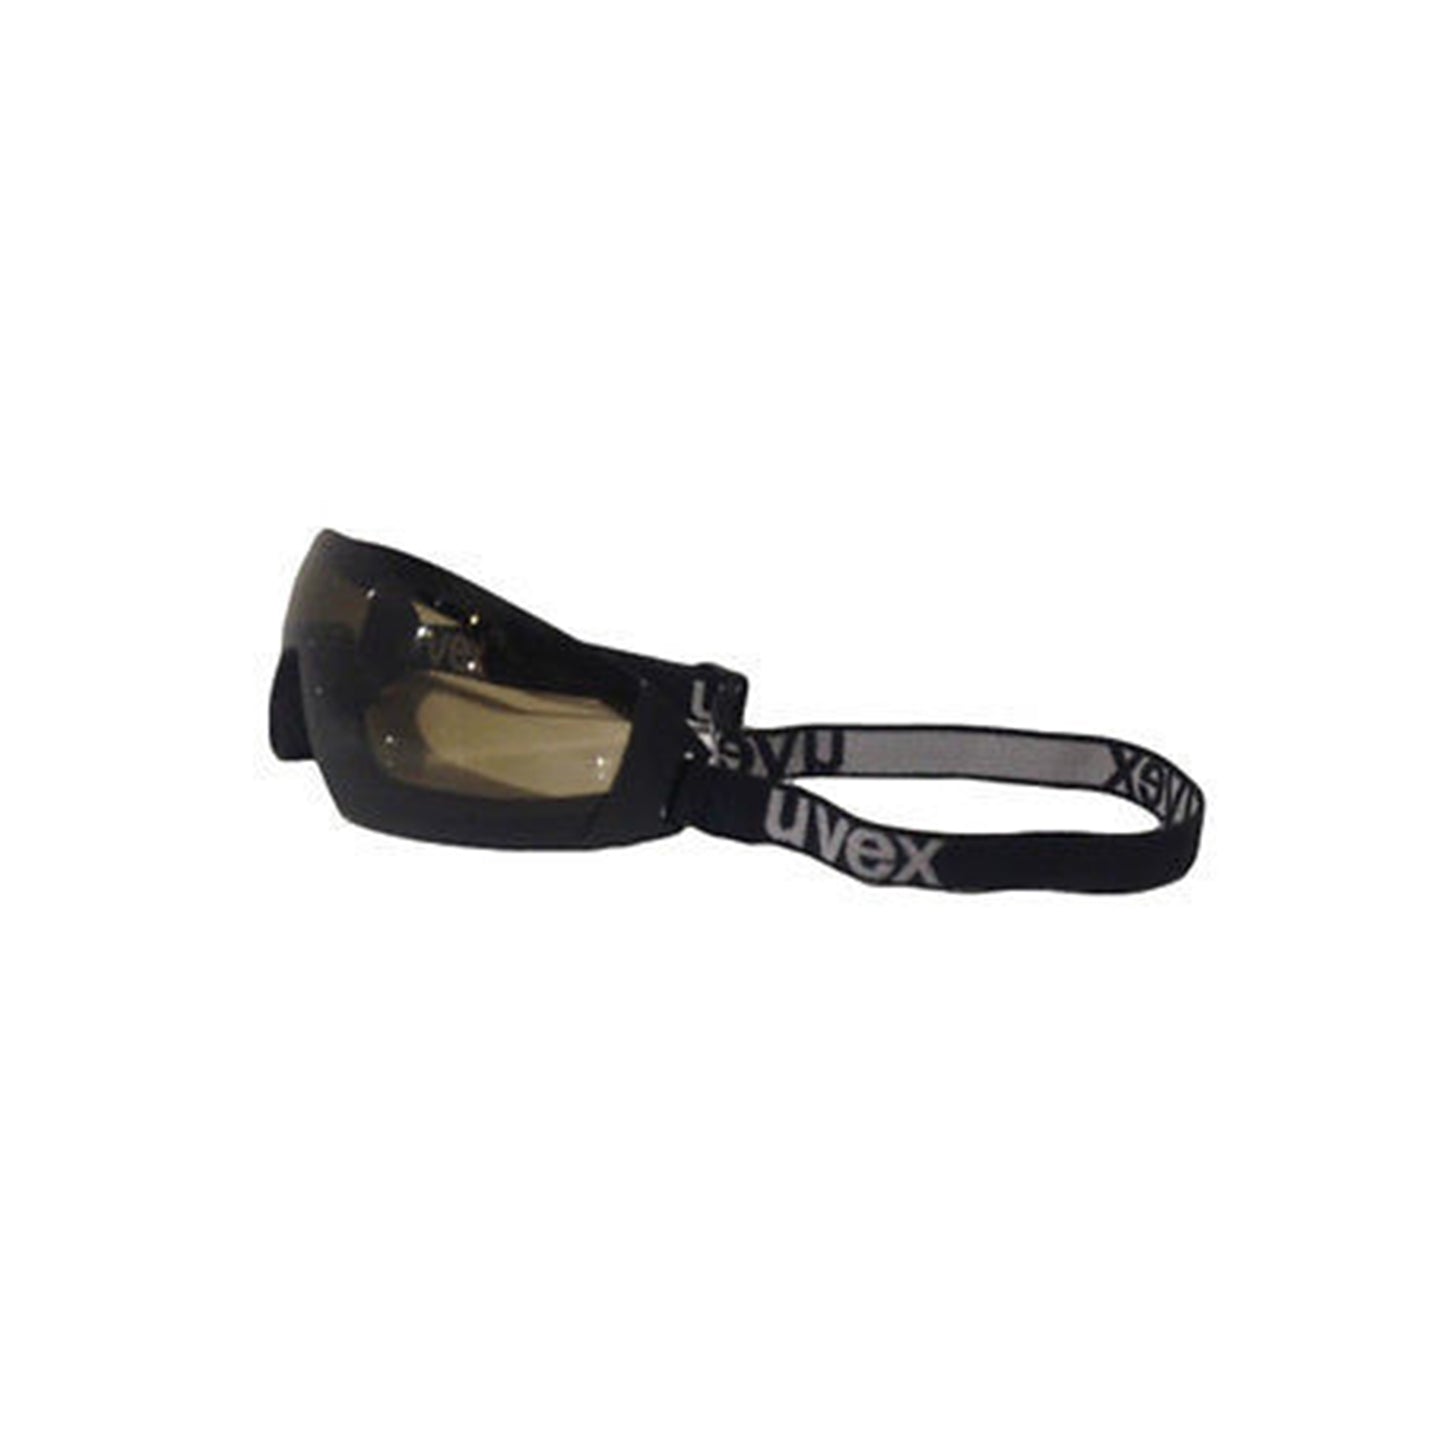 uvex jockey goggles. Brown tinted lenses, elasticated headband. Horse-riding, airsoft, motorcycle goggles. protexU